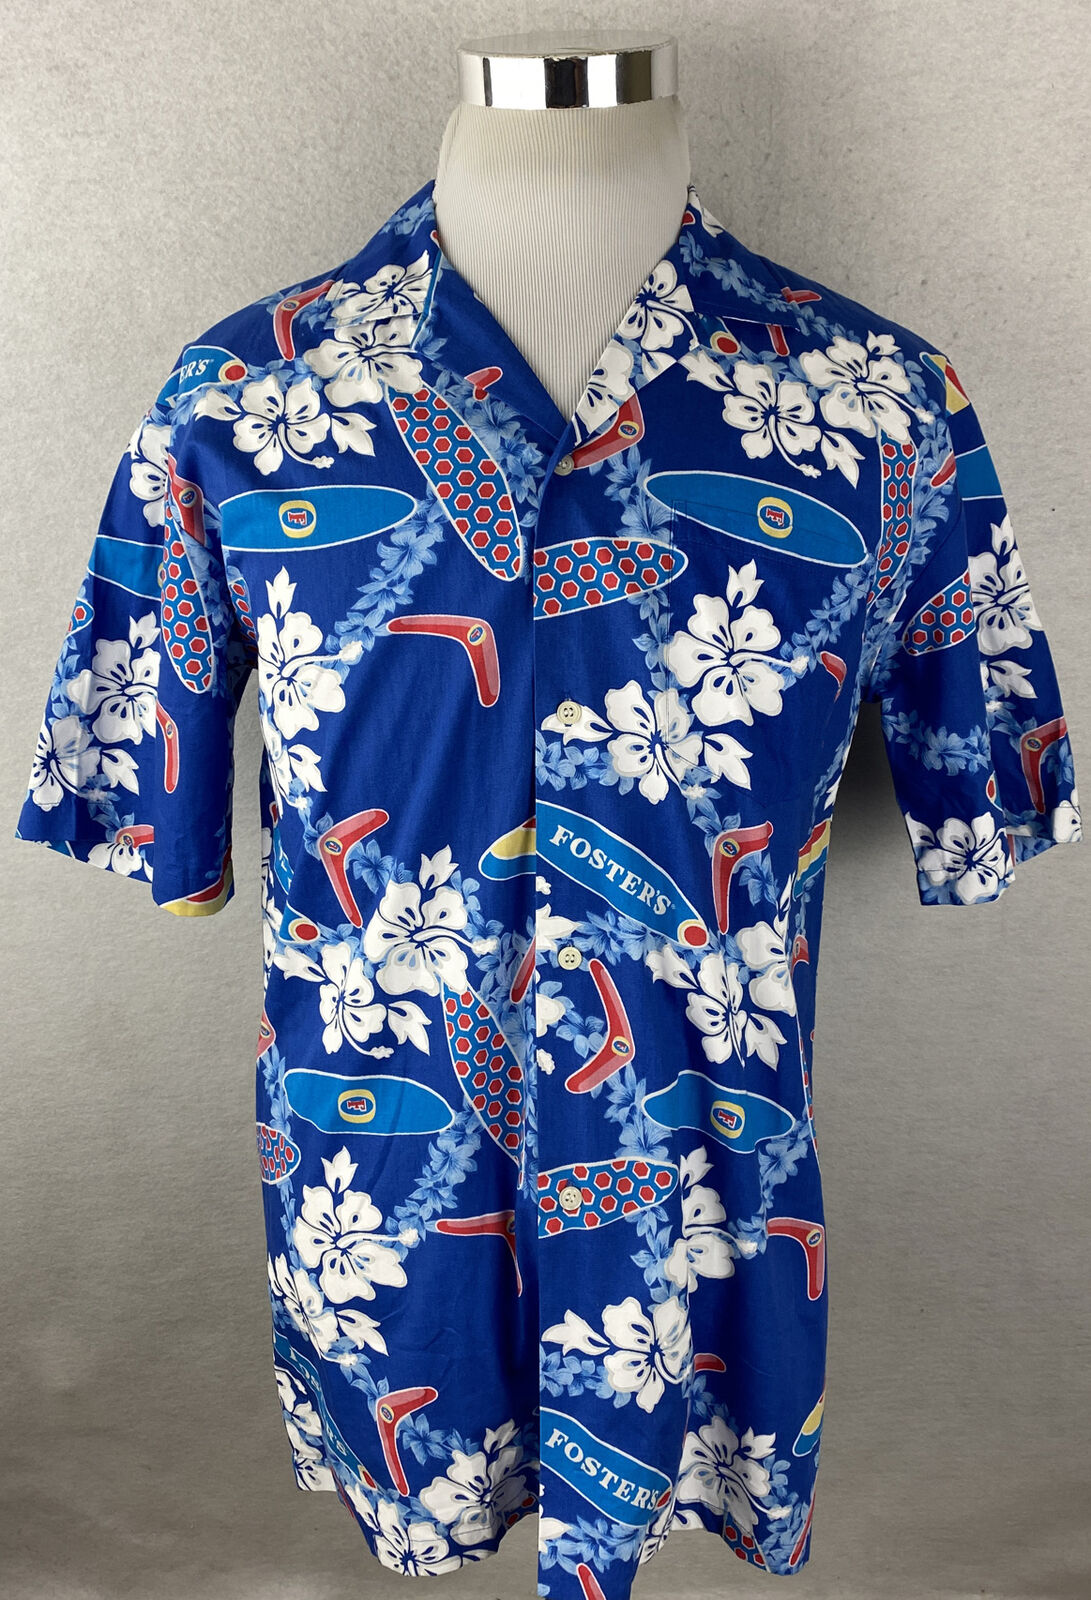 Fosters lager Hawaiian Shirt, Beach shorts